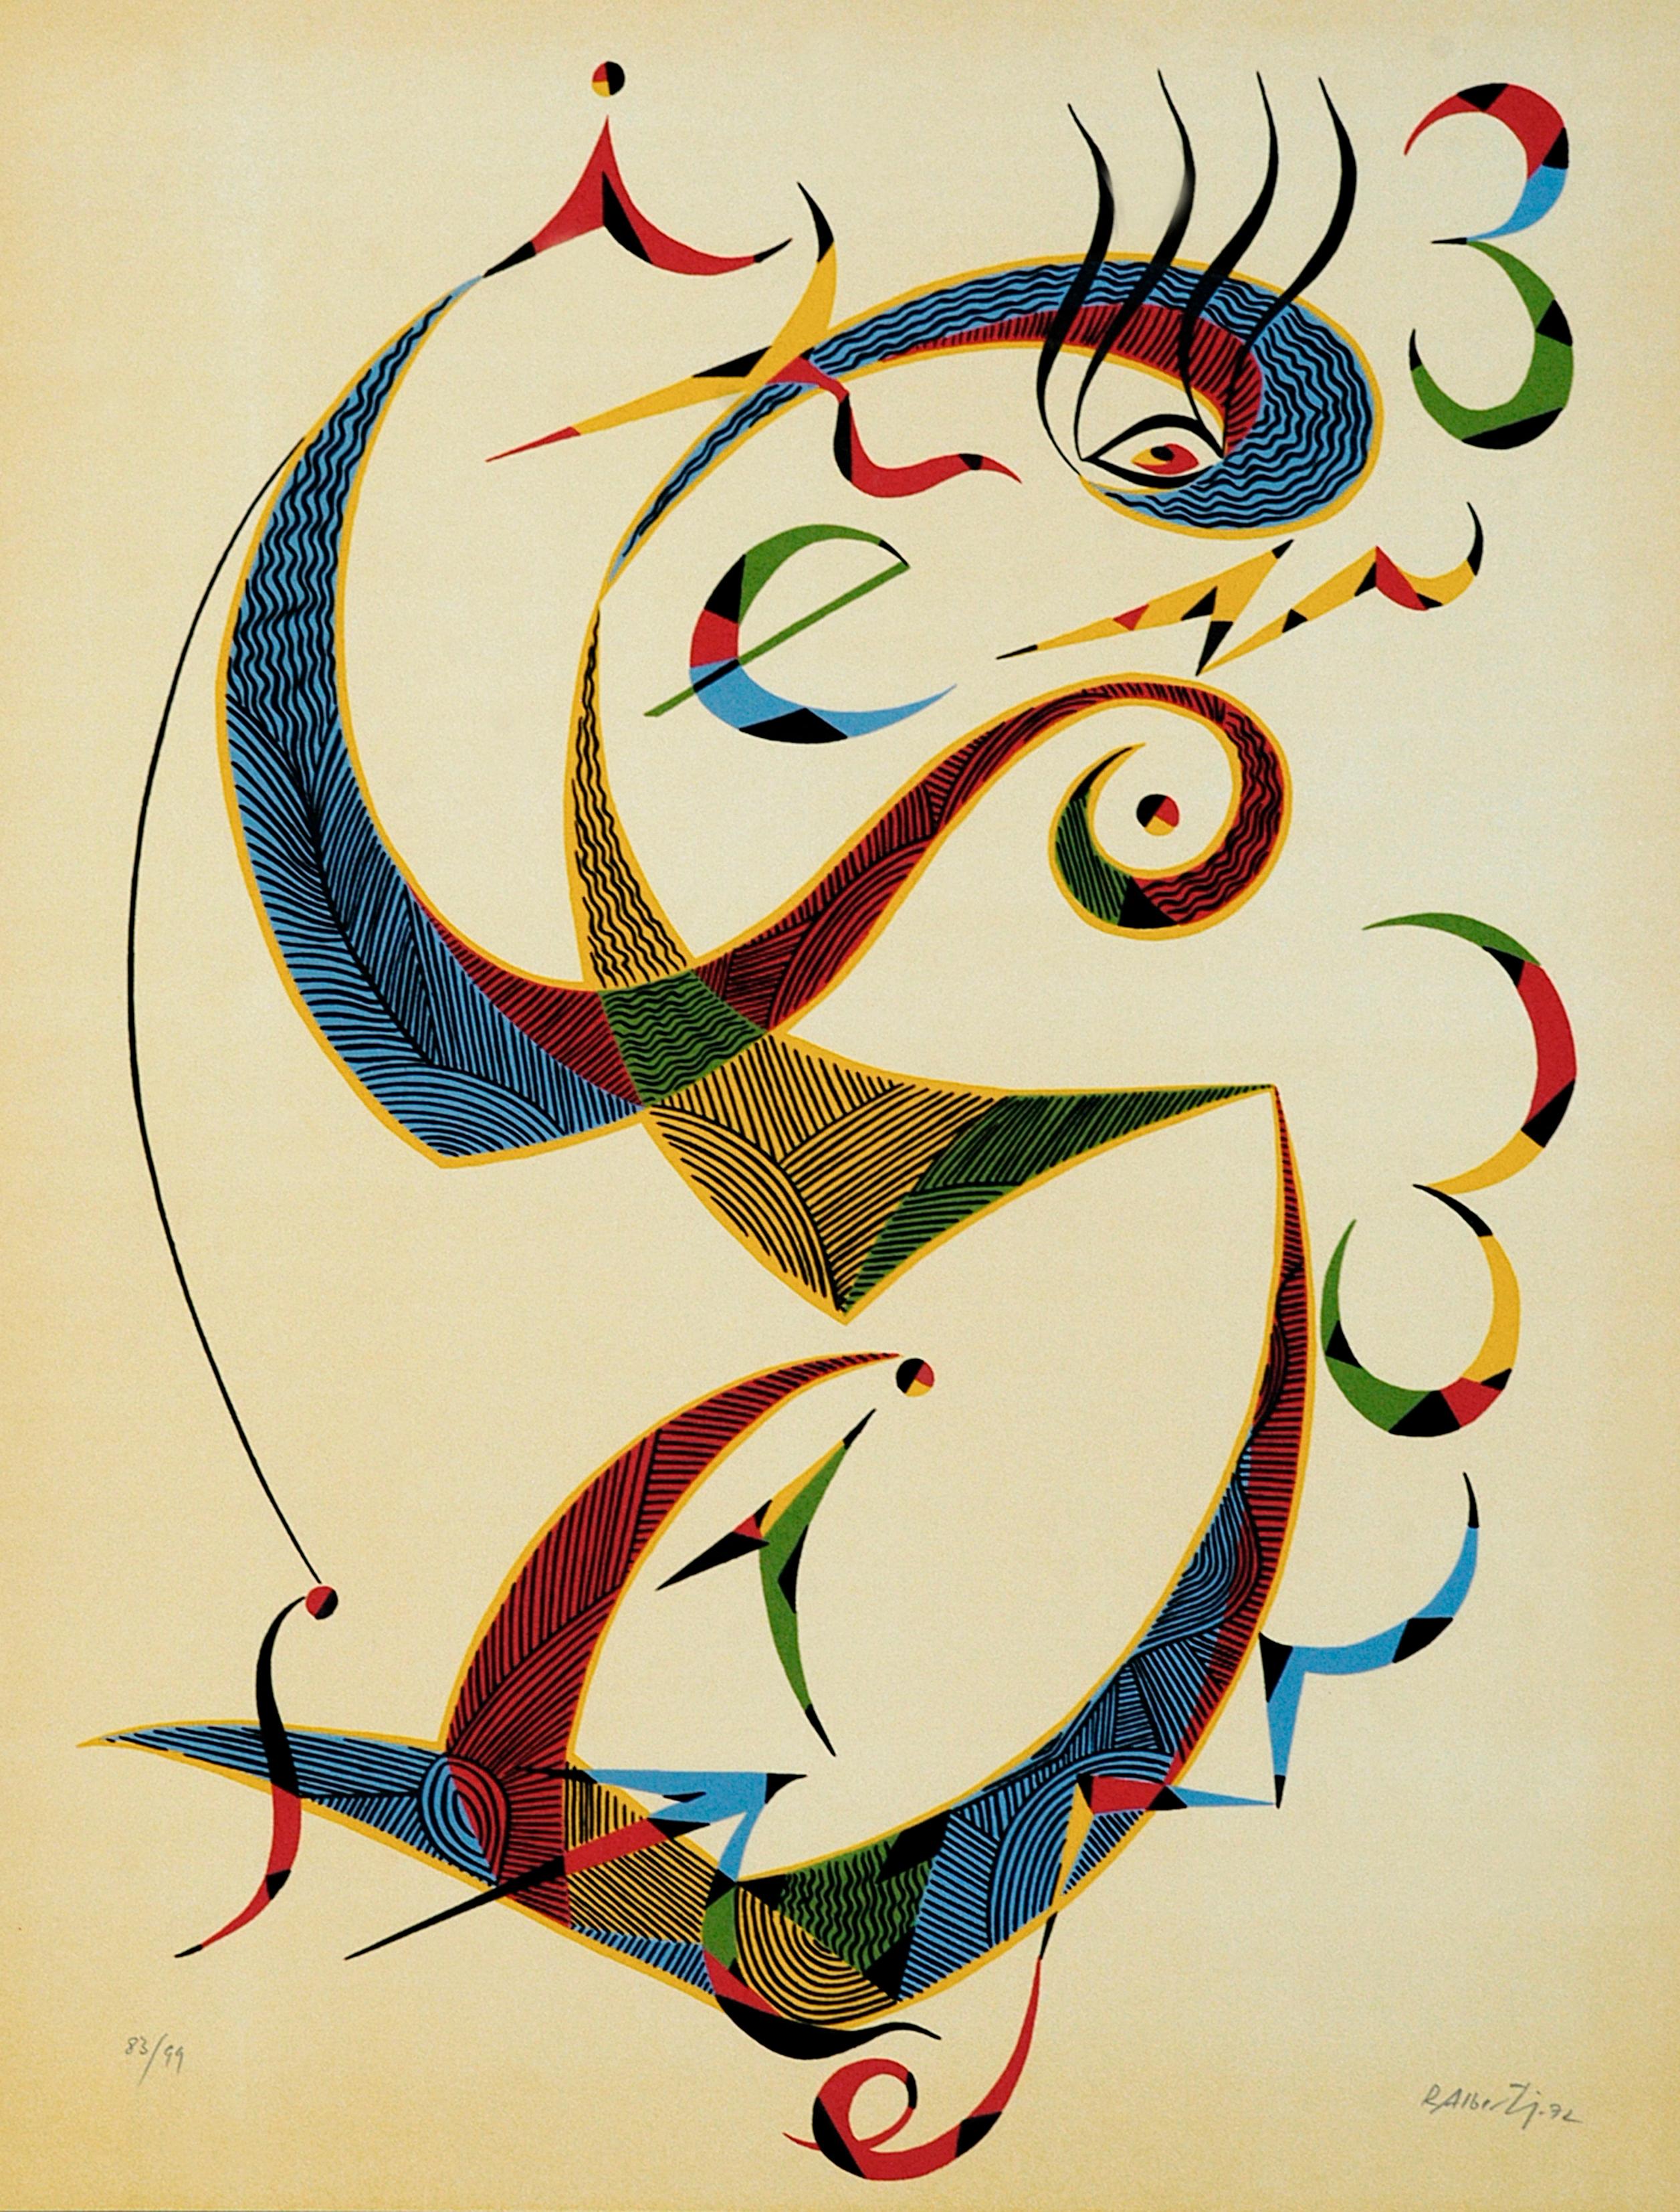 Letter S - Original Lithograph by Raphael Alberti - 1972